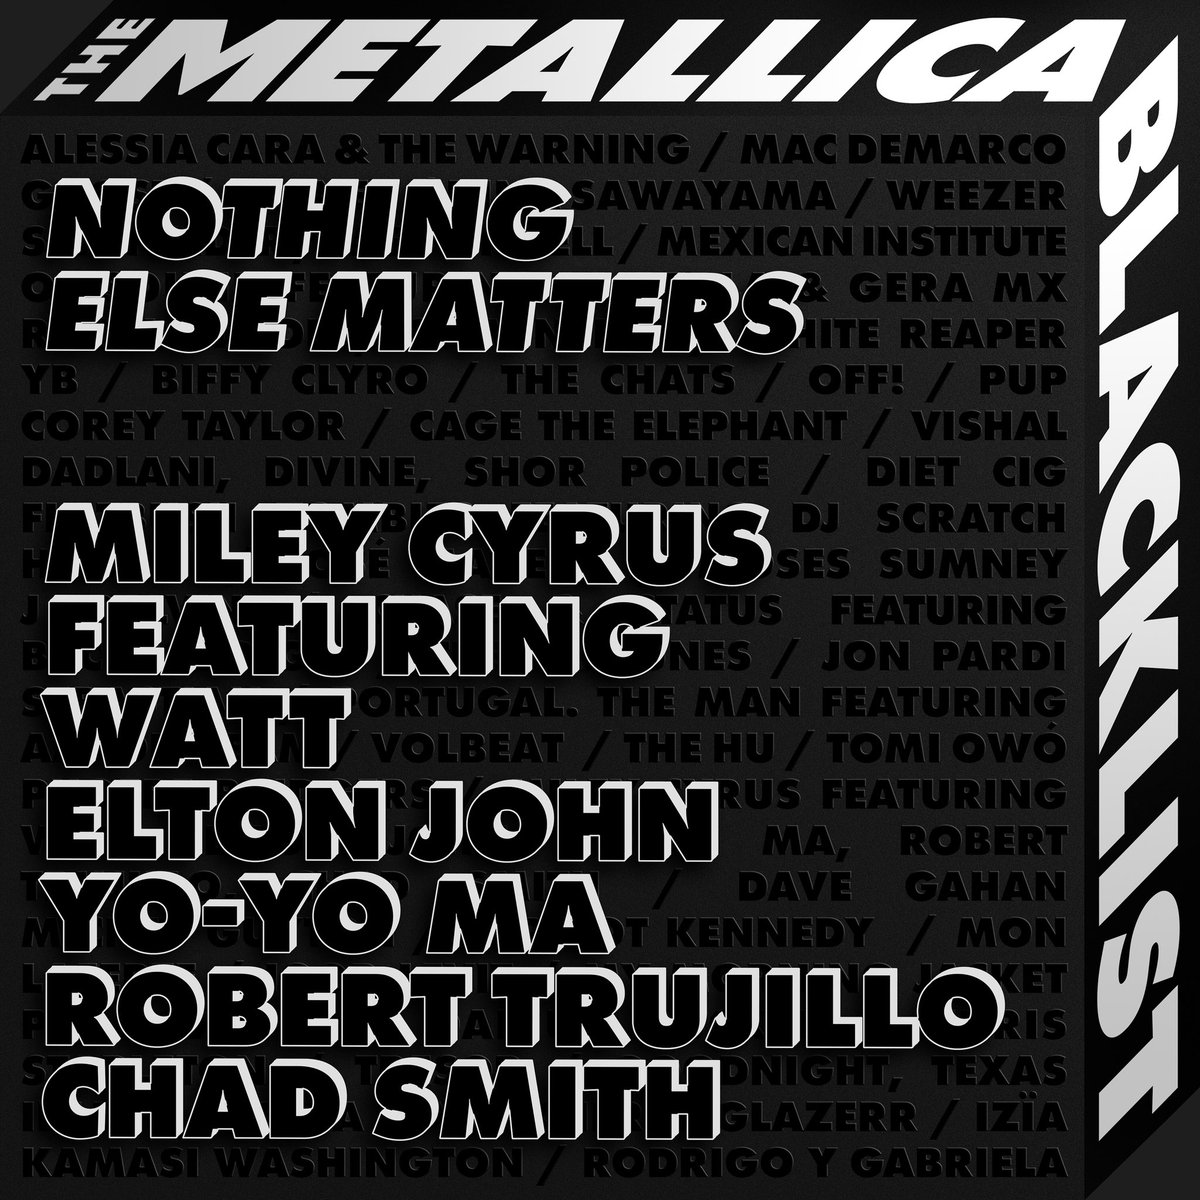 AVENGERS OF ROCK N ROLL!!! @Metallica #BLACKALBUM #METALLICABLACKLIST smarturl.it/TMB-NEM-MC